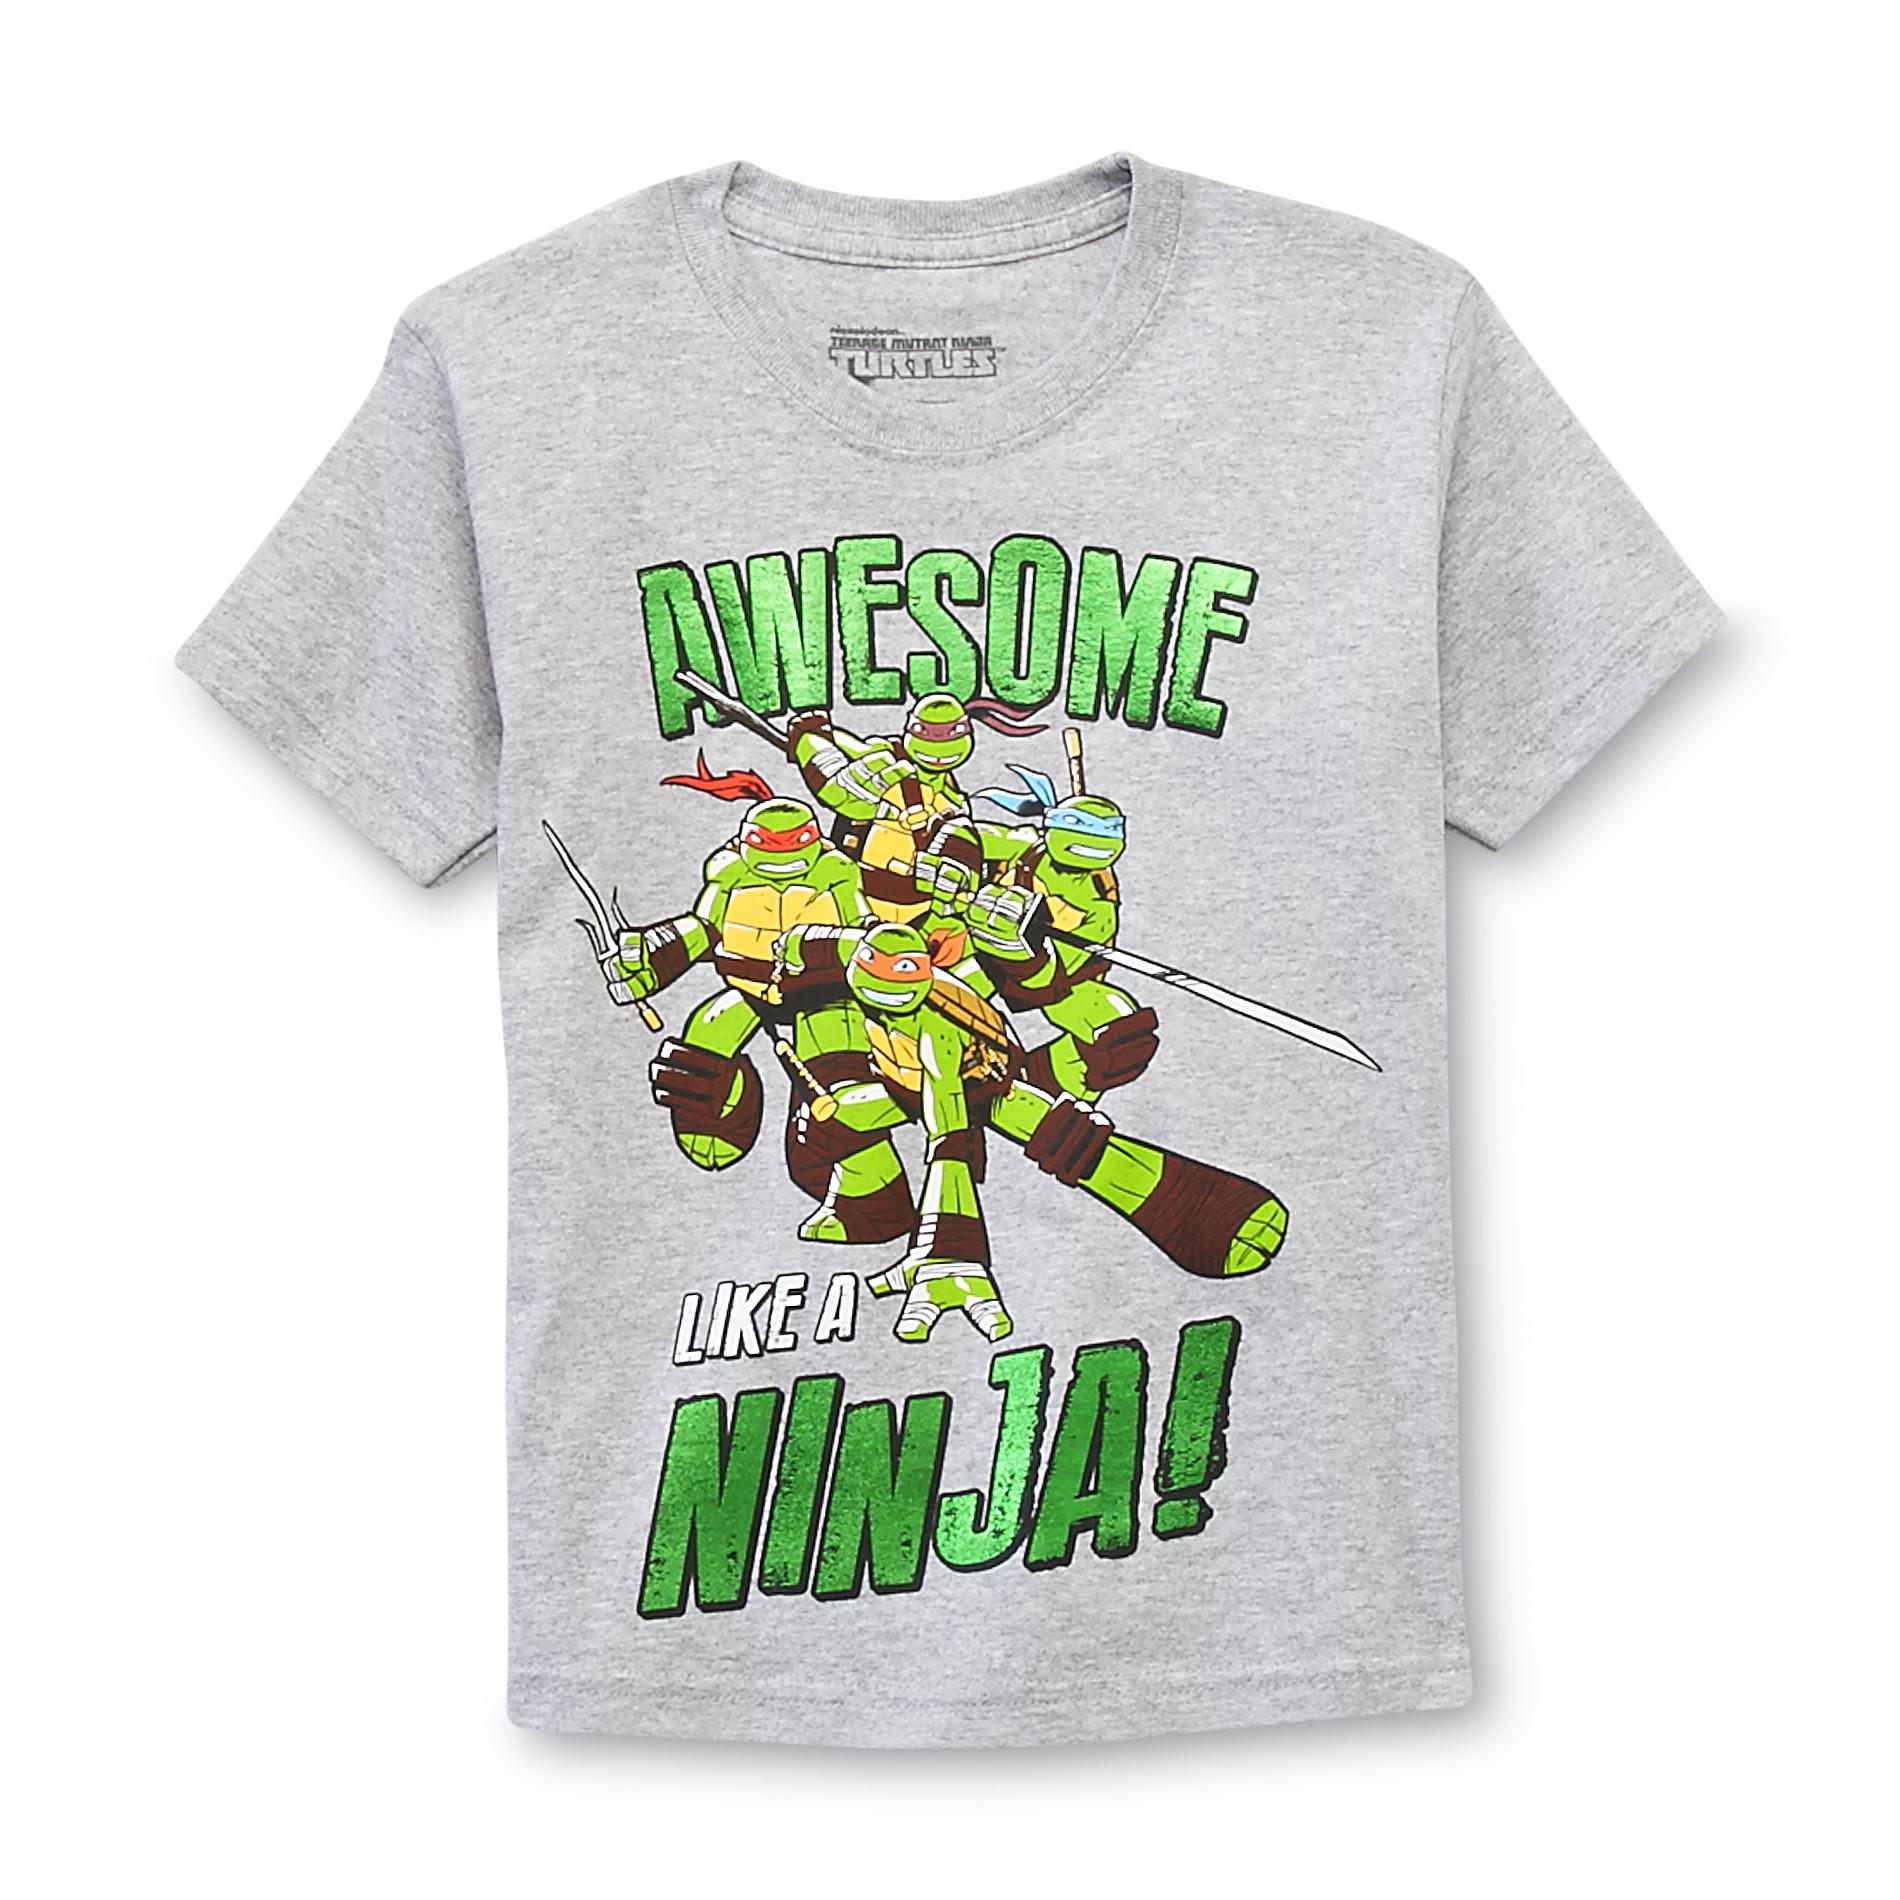 Nickelodeon Teenage Mutant Ninja Turtles Boy's T-Shirt - Awesome